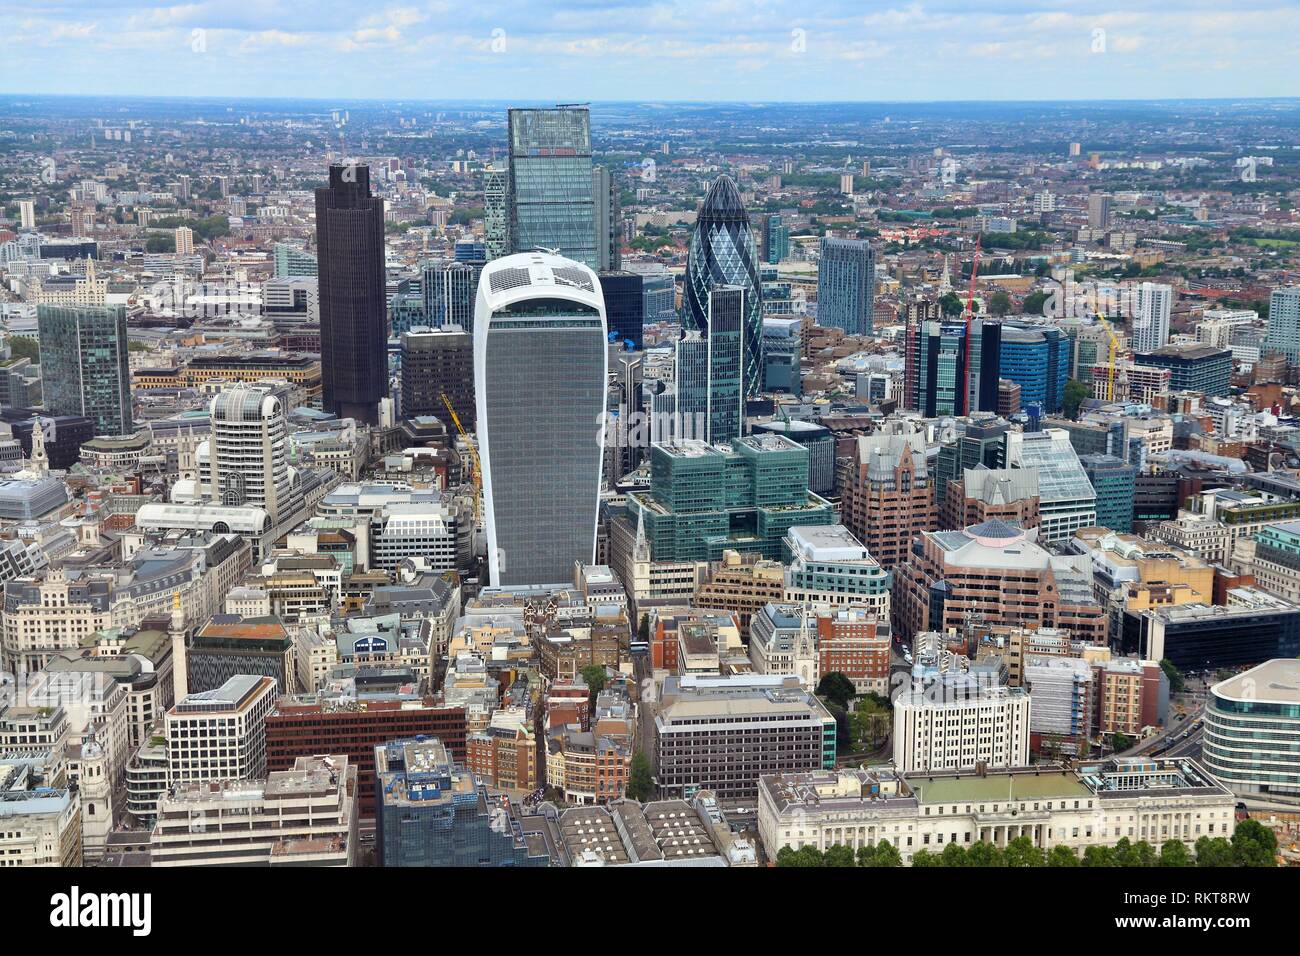 City of London skyline - capital city of the UK. Stock Photo